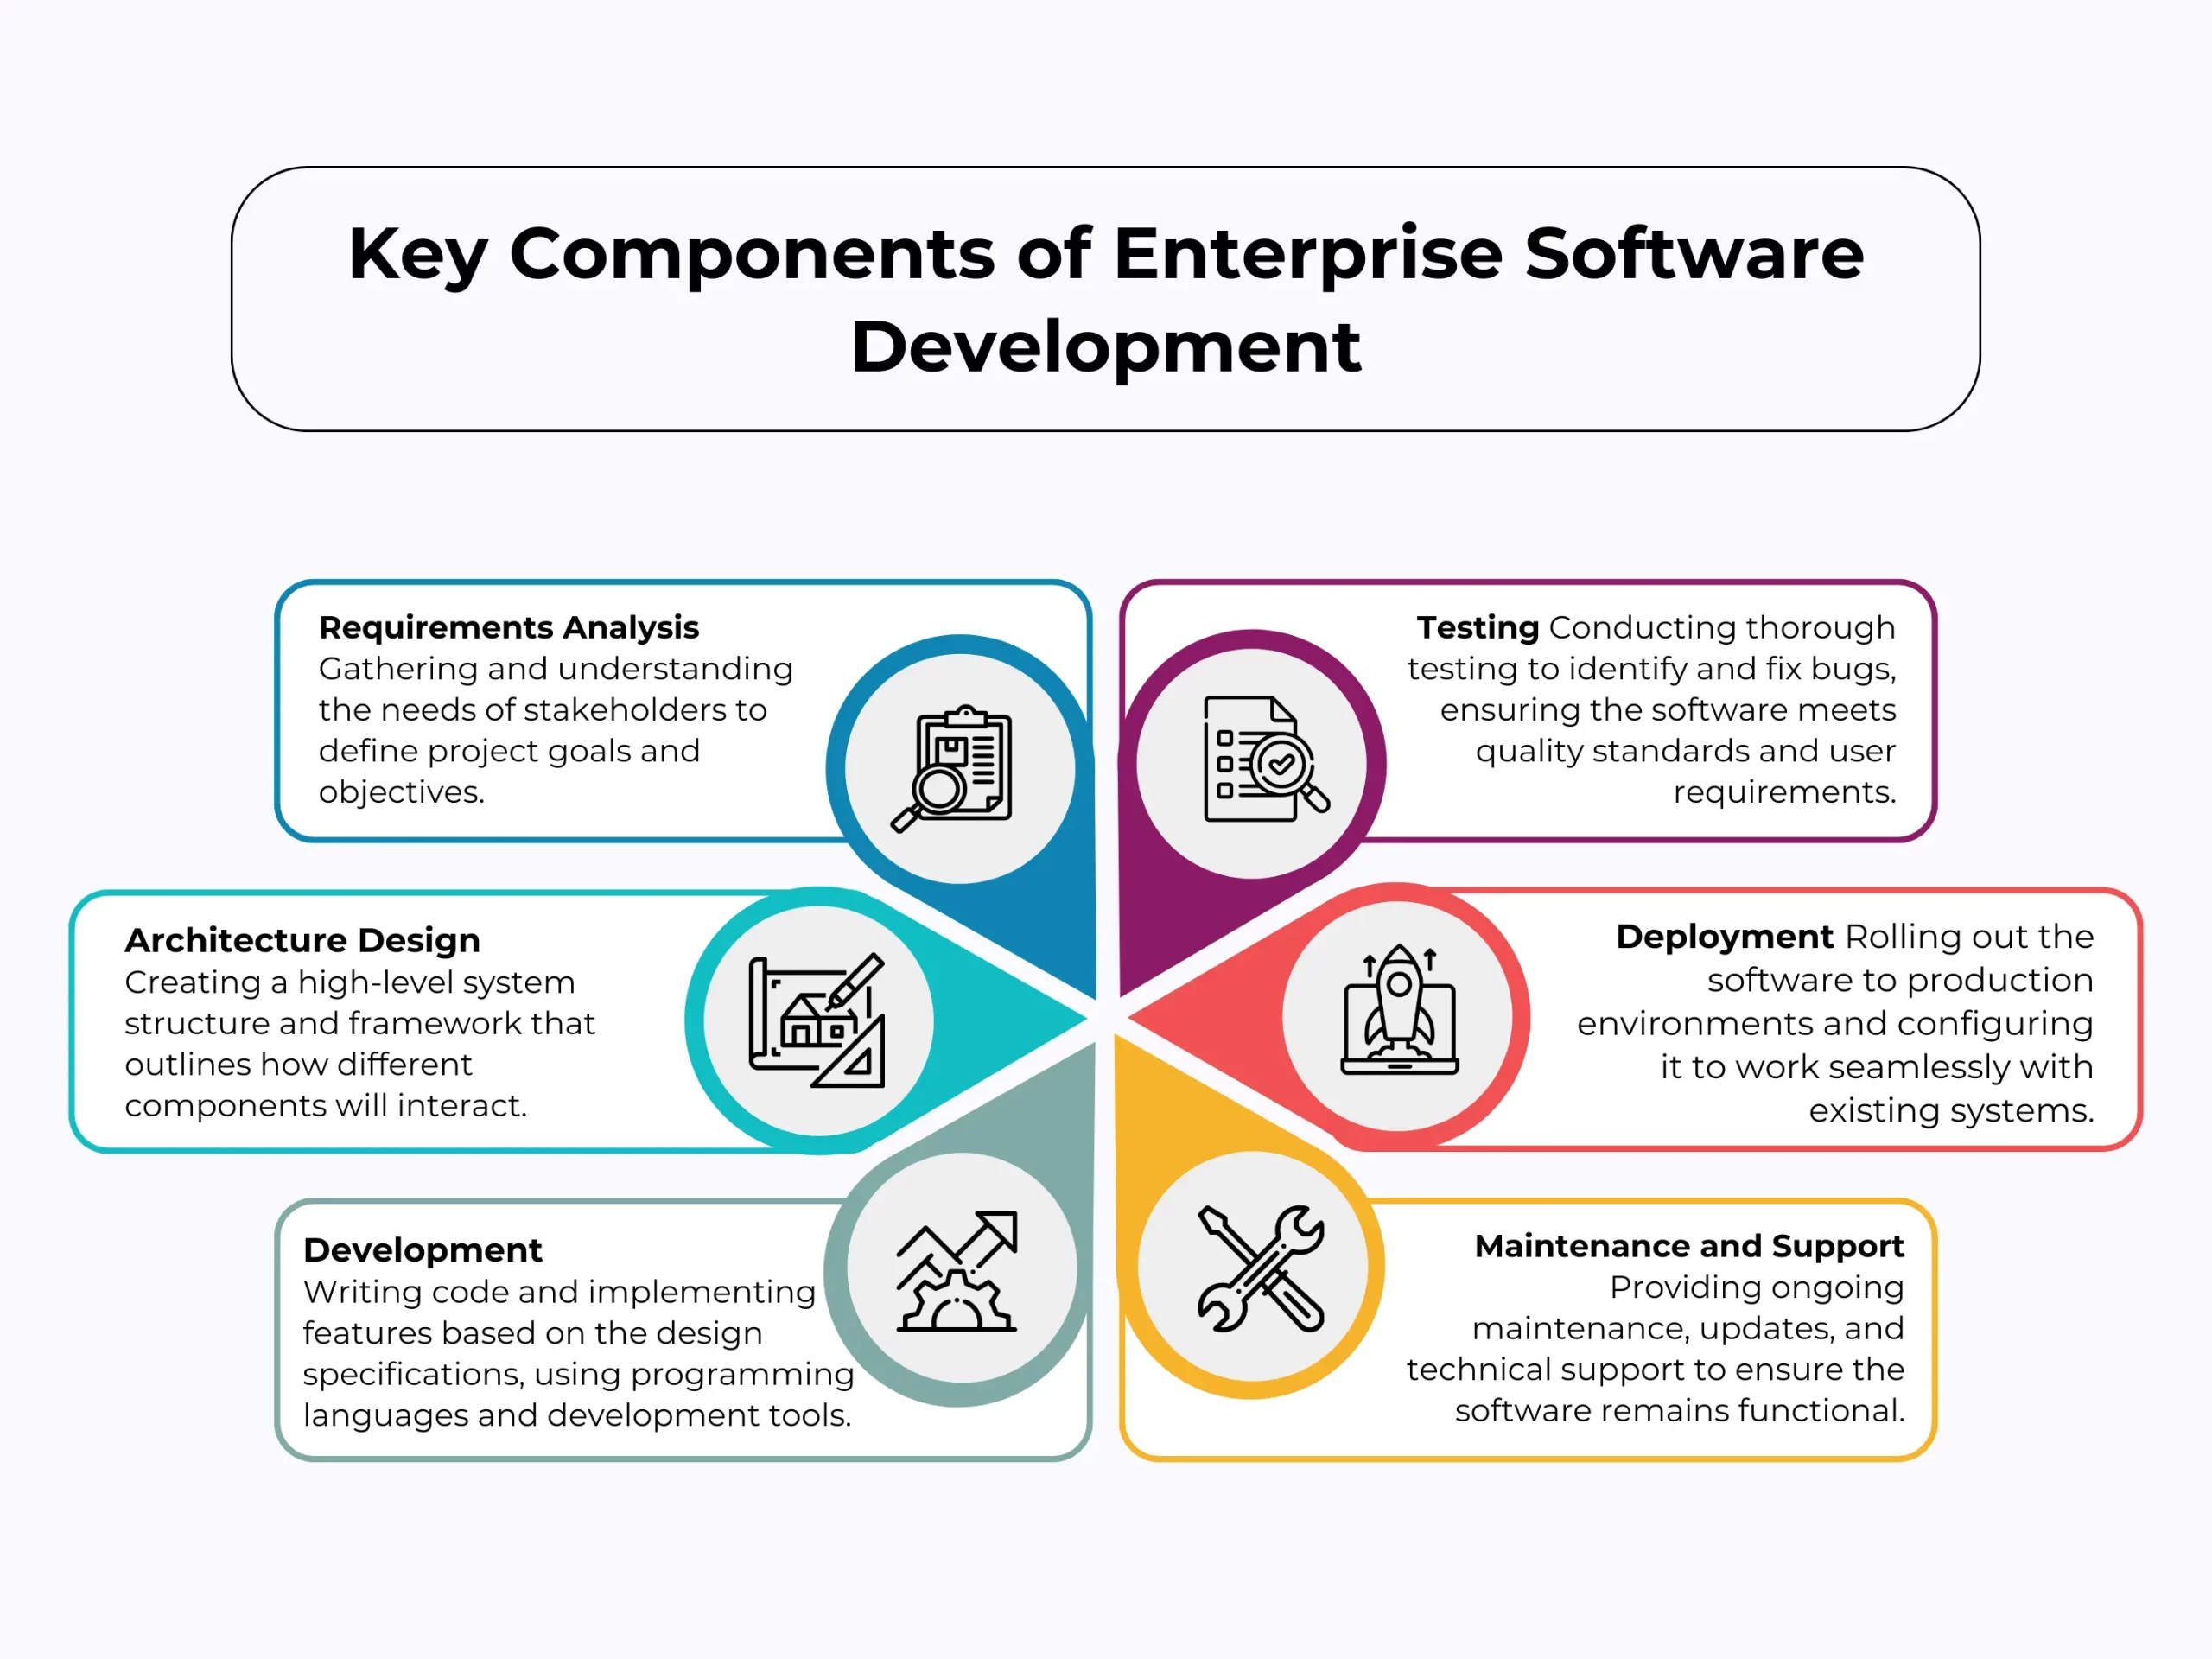 Key Components of Enterprise Software Development